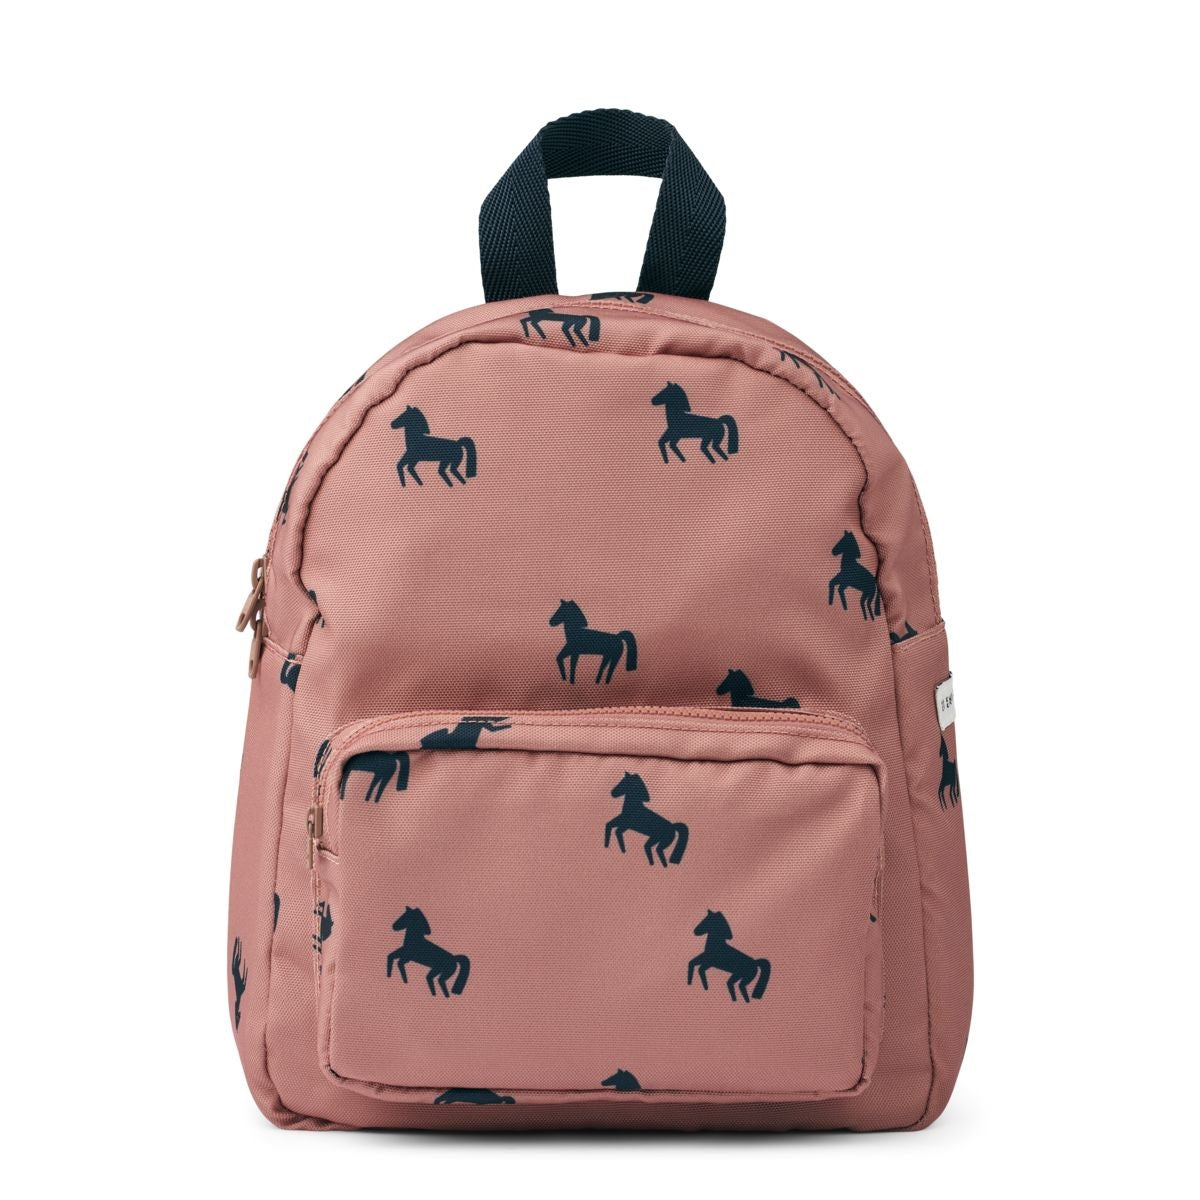 Liewood Allan Children's Backpack - Horses/Dark Rosetta